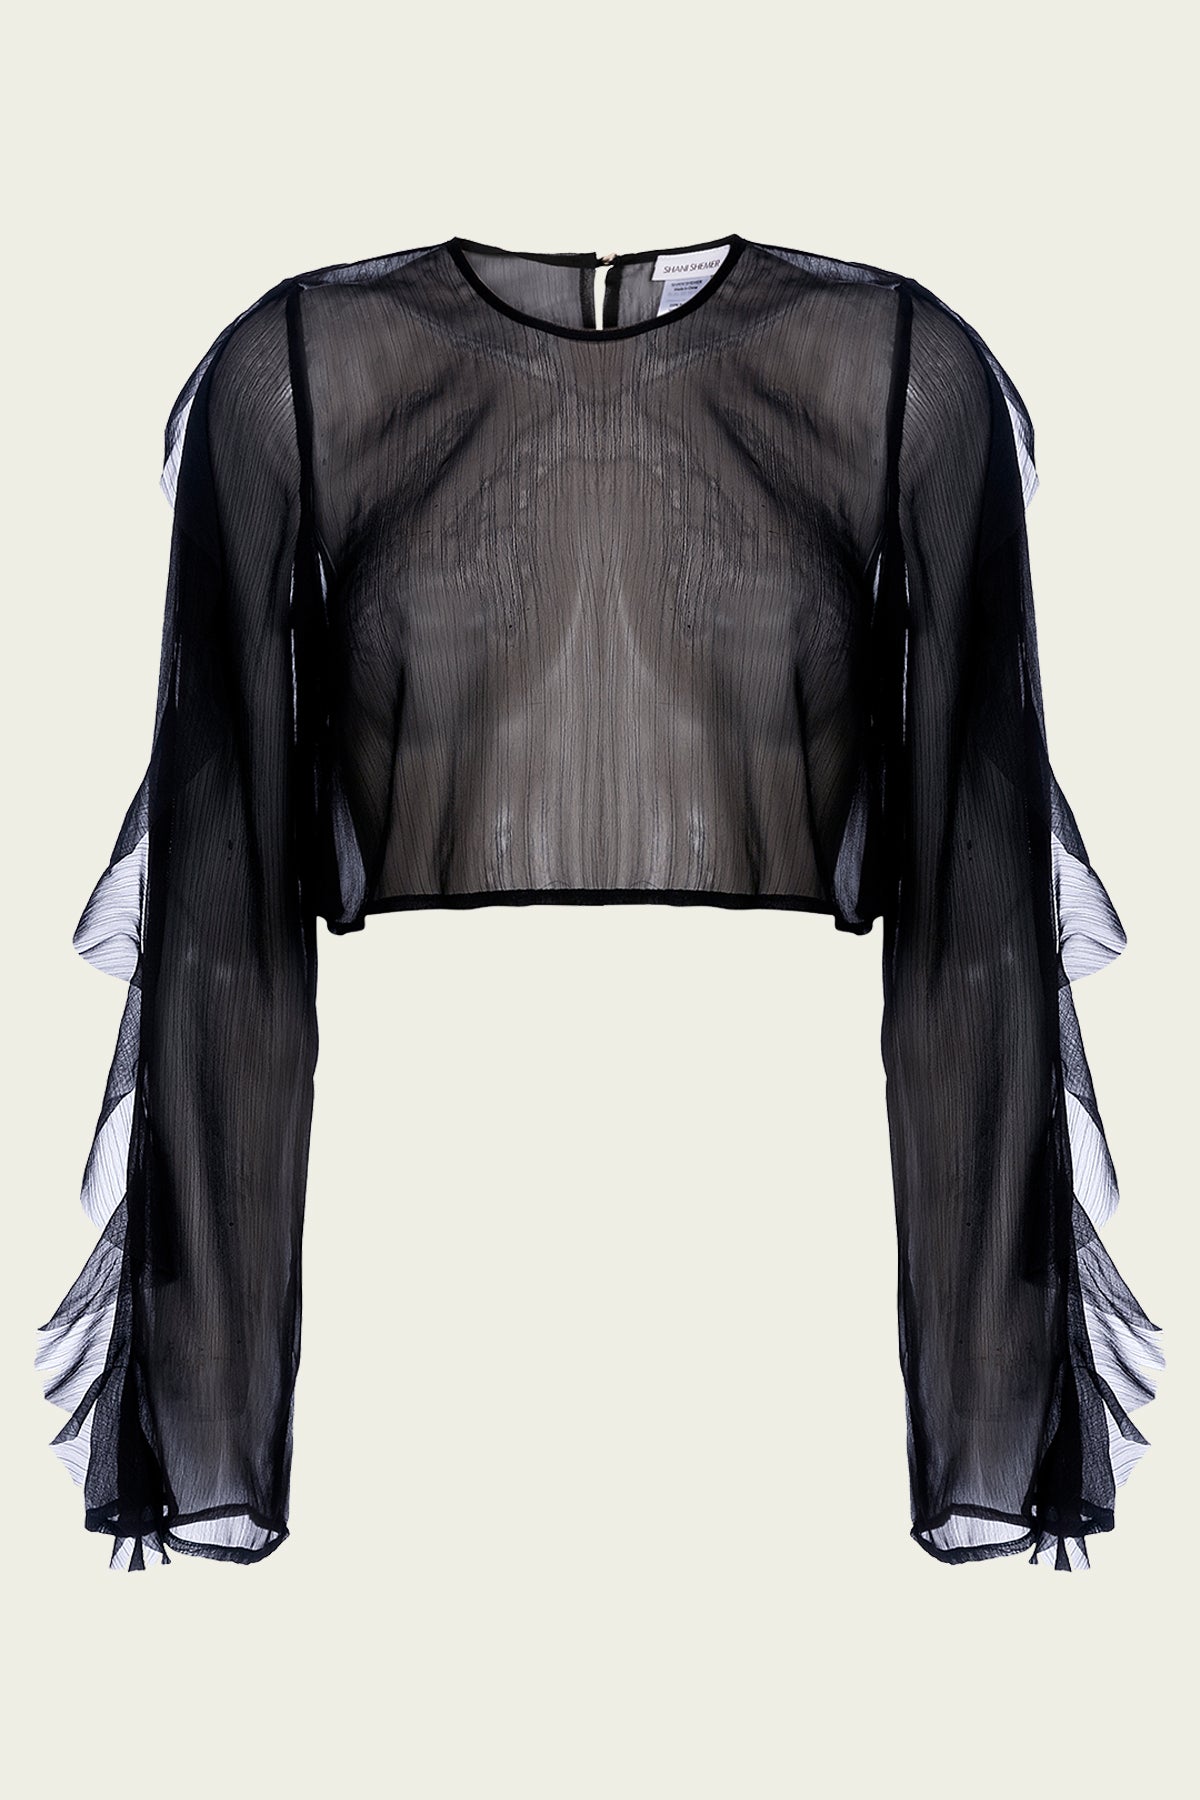 Thoma Cropped Shirt in Black - shop-olivia.com